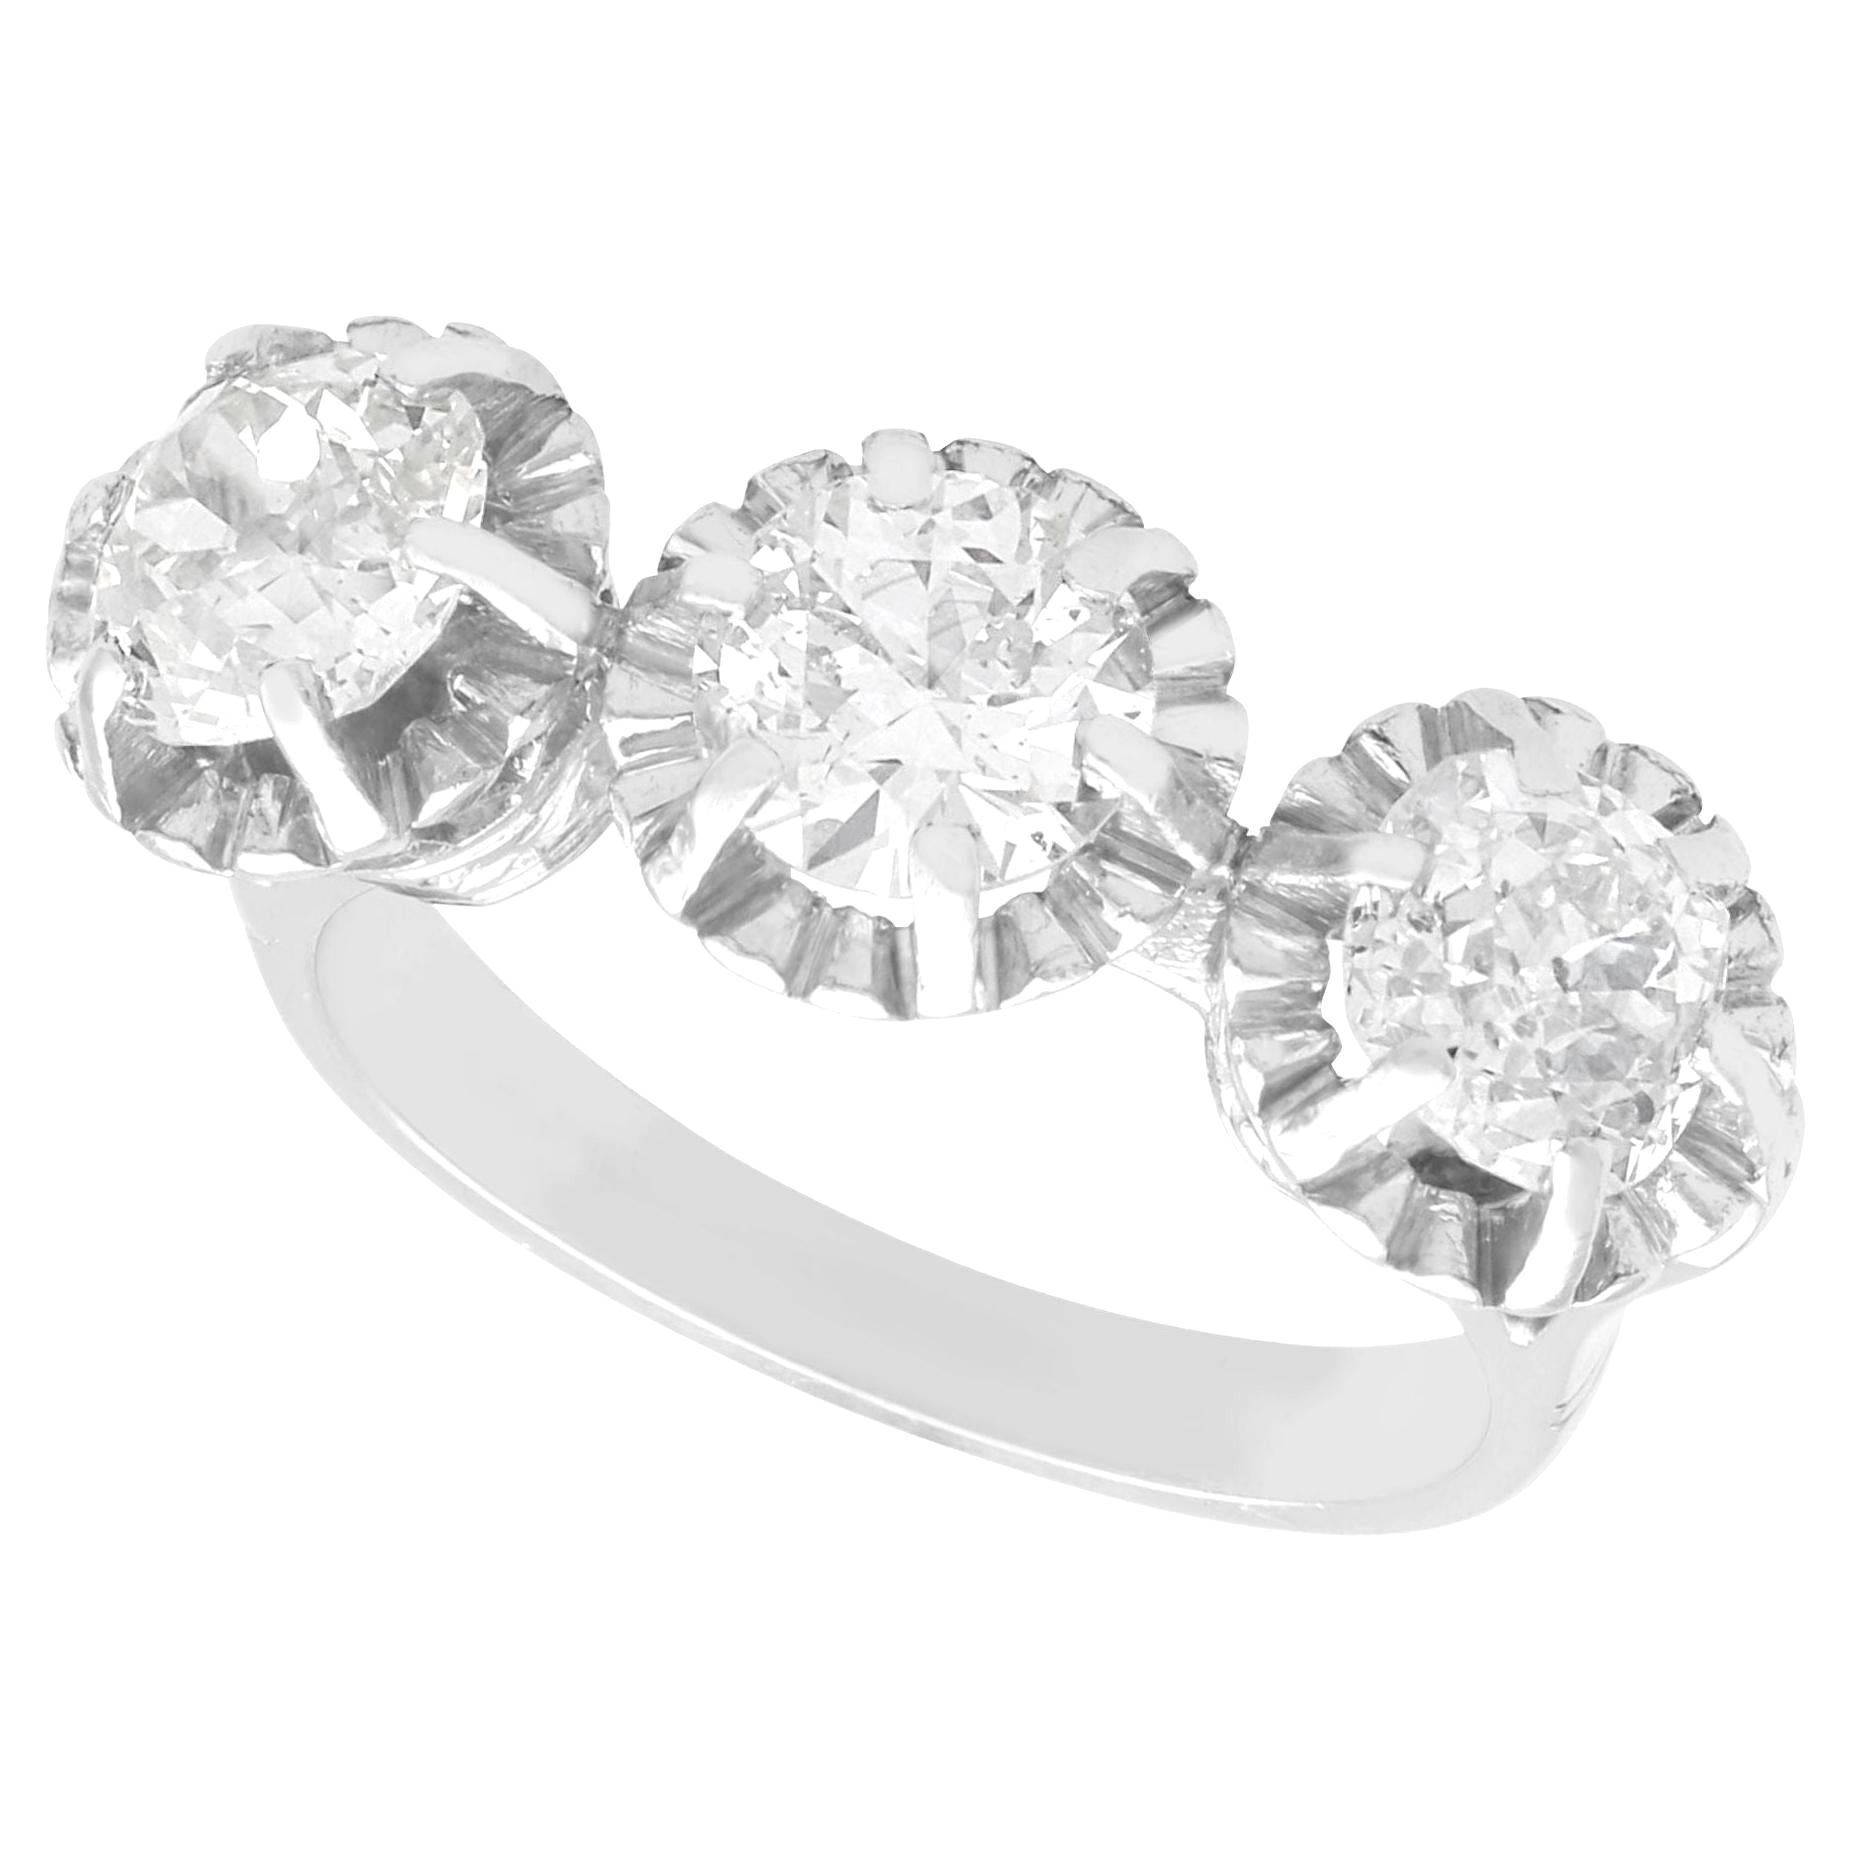 1920s 1.81 Carat Diamond Trilogy Ring in Palladium For Sale